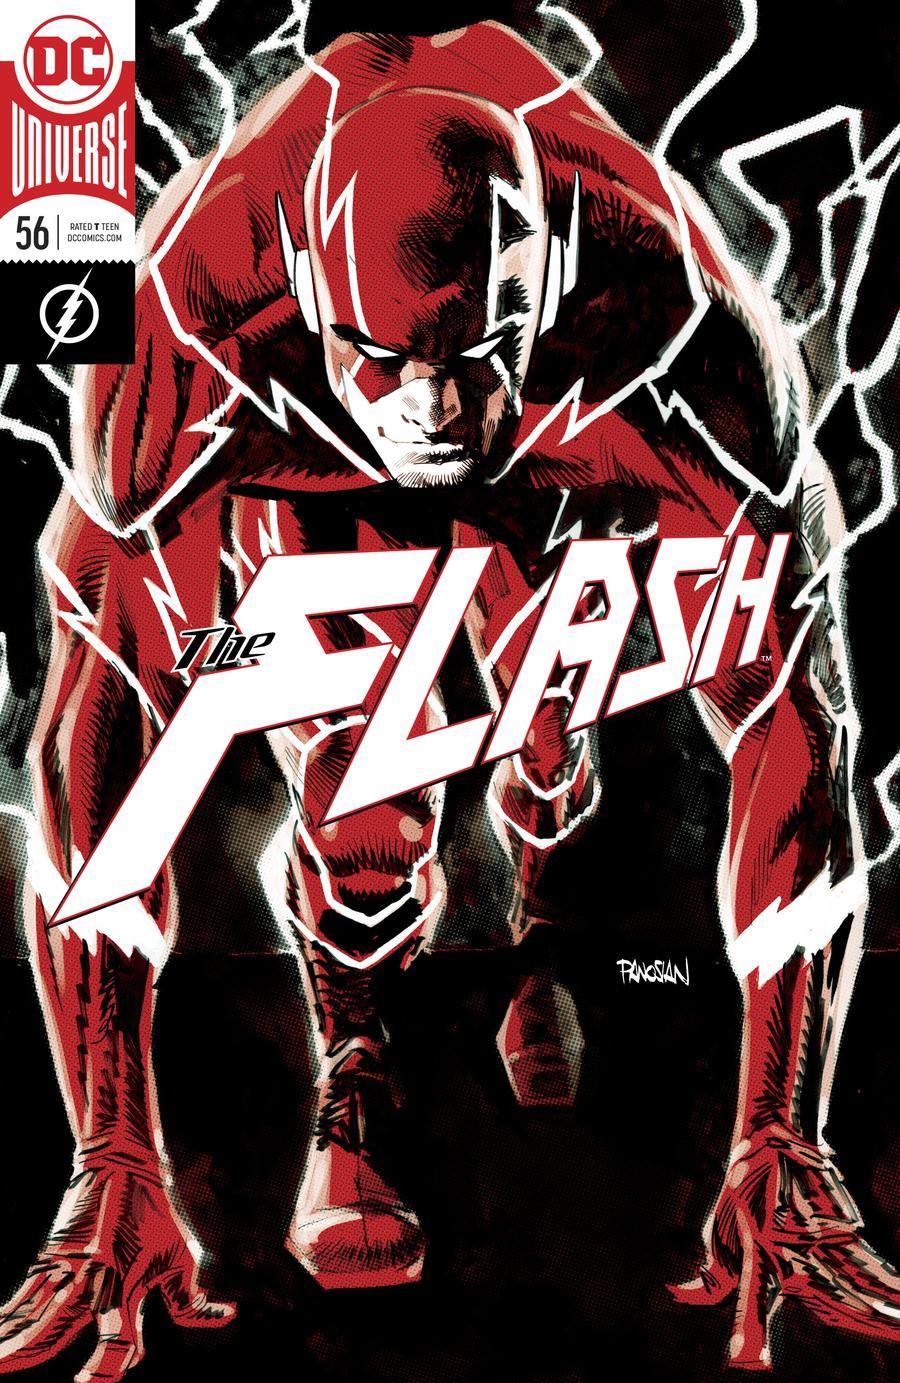 Flash Vol. 5 #56